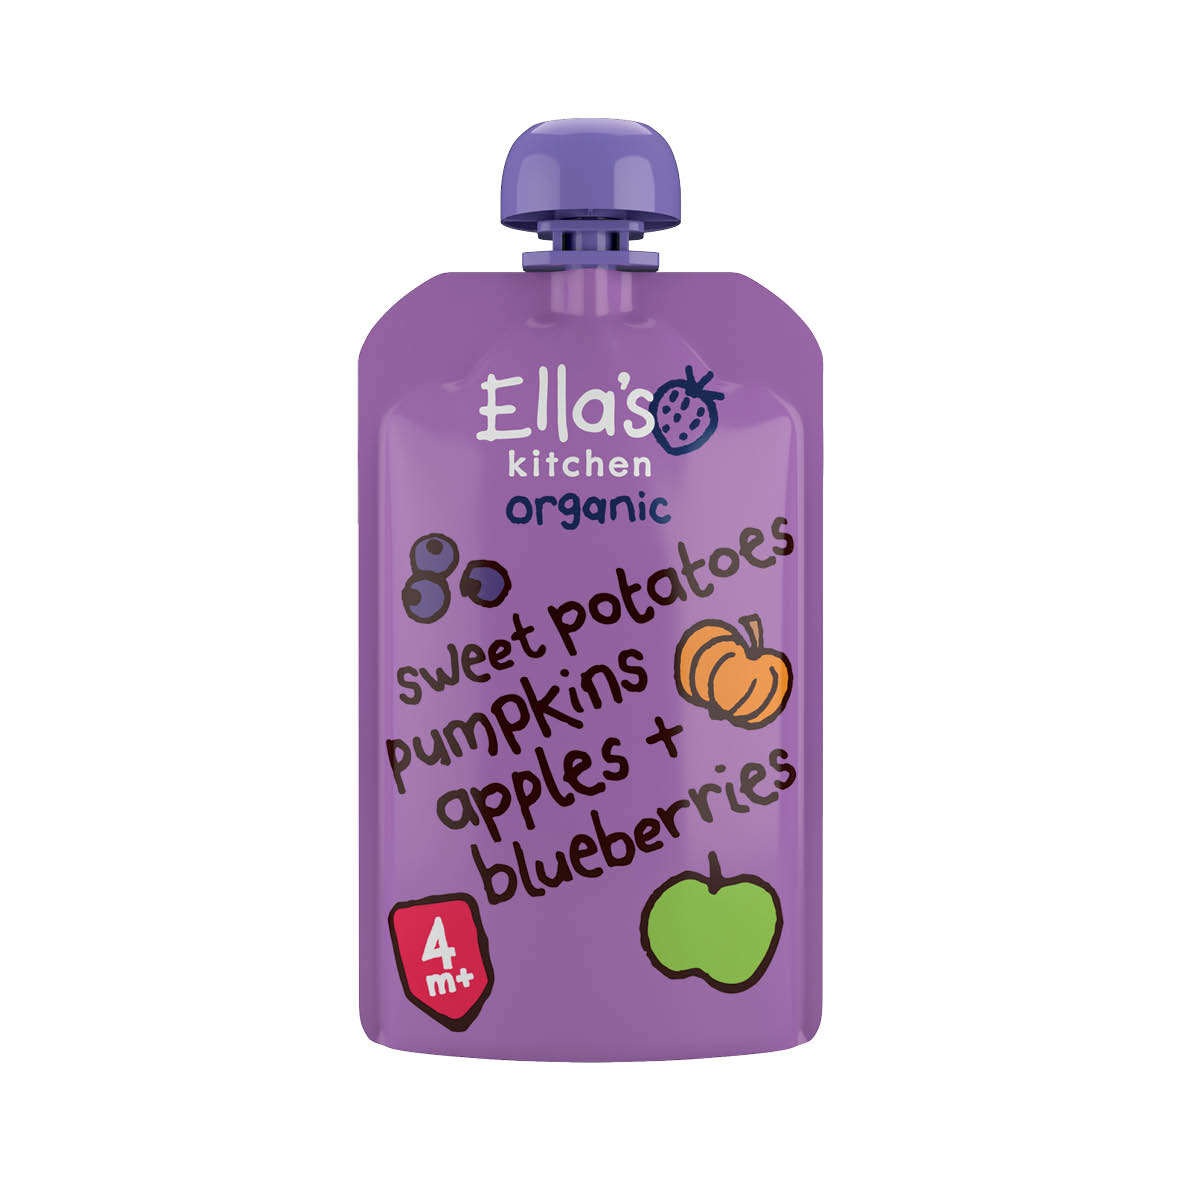 Ella's Kitchen sweet potatoes, pumpkins, apples and blueberries